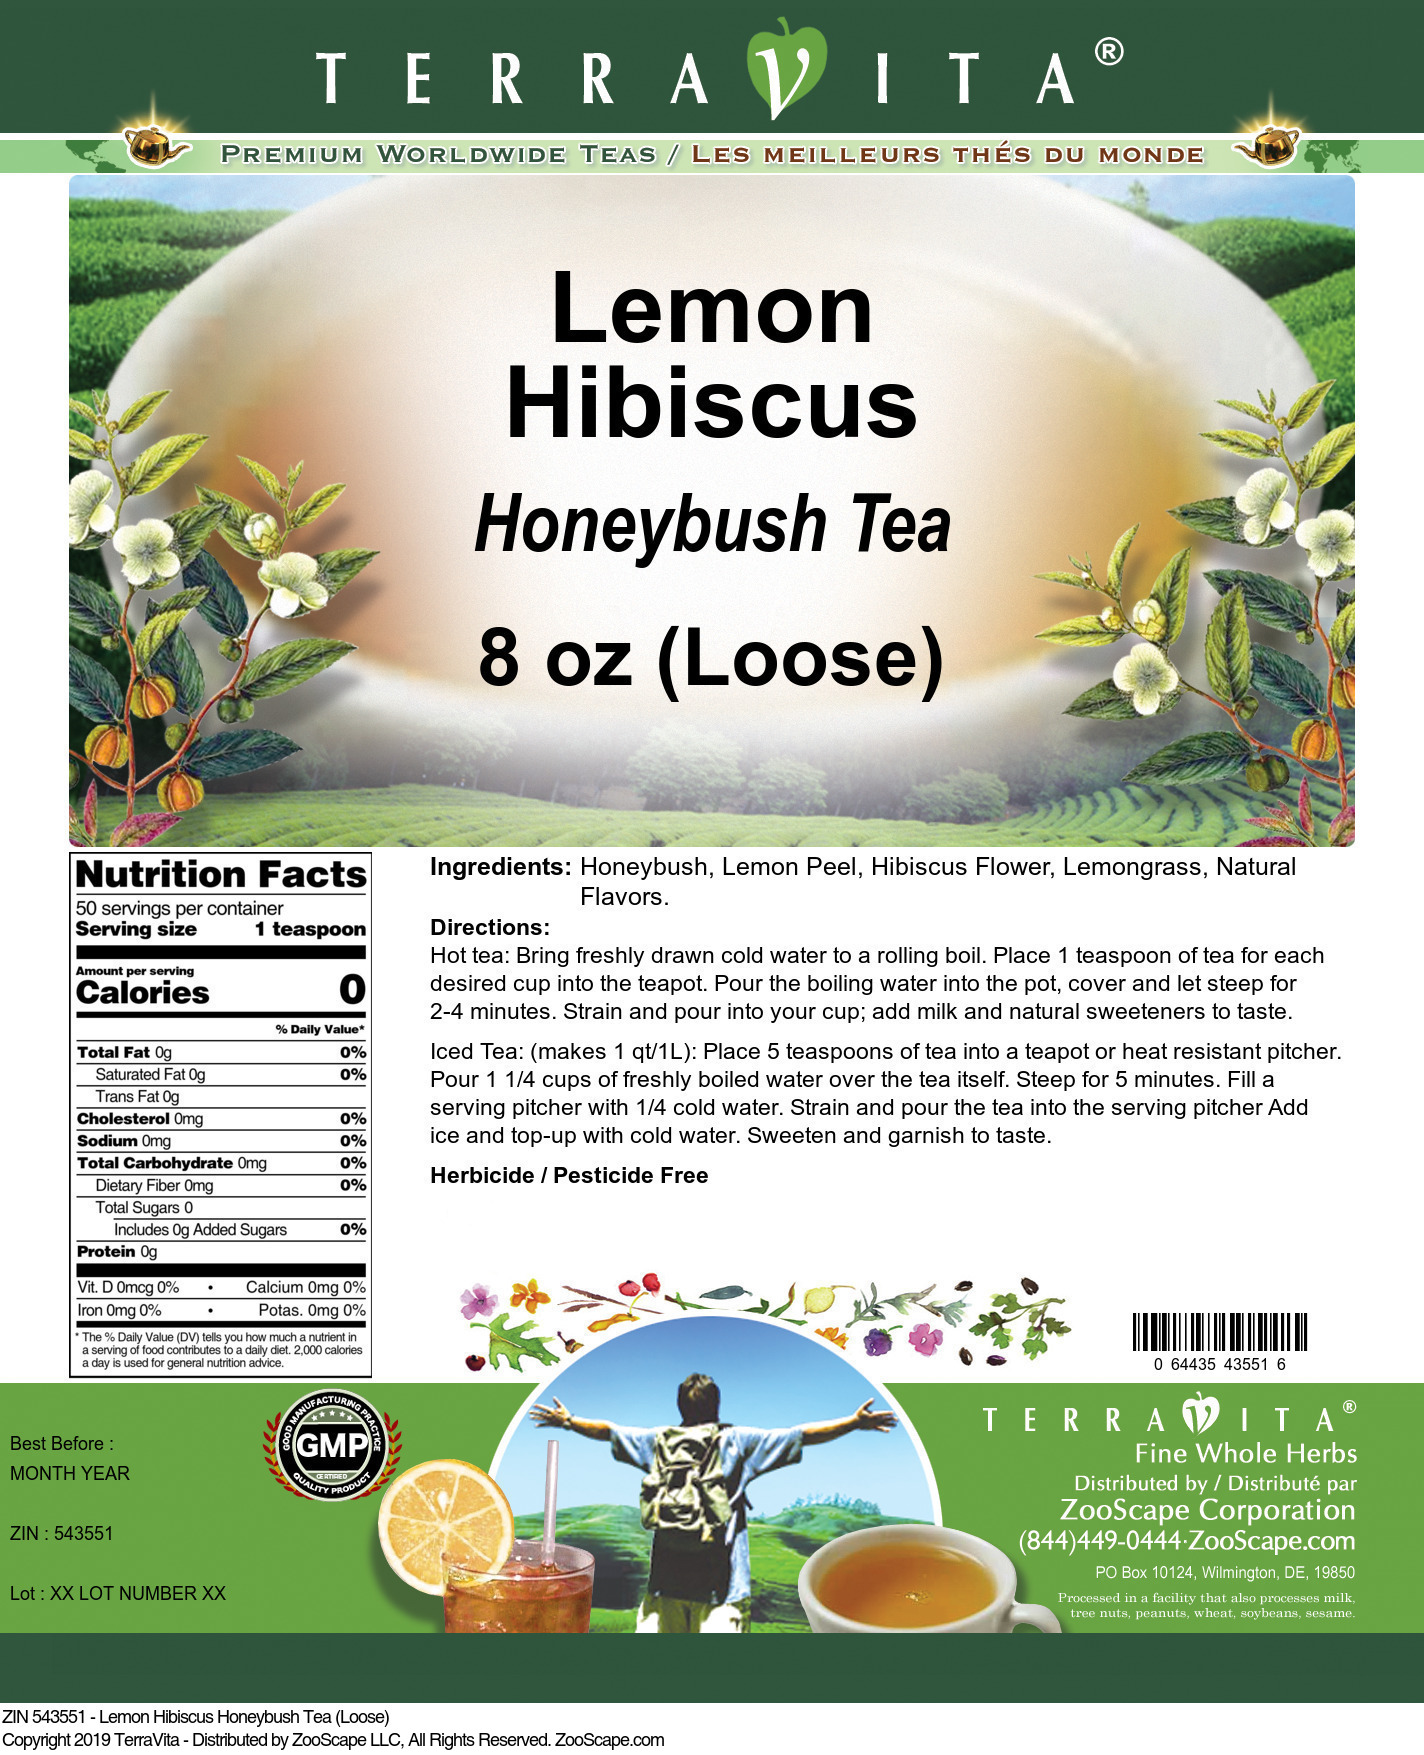 Lemon Hibiscus Honeybush Tea (Loose) - Label